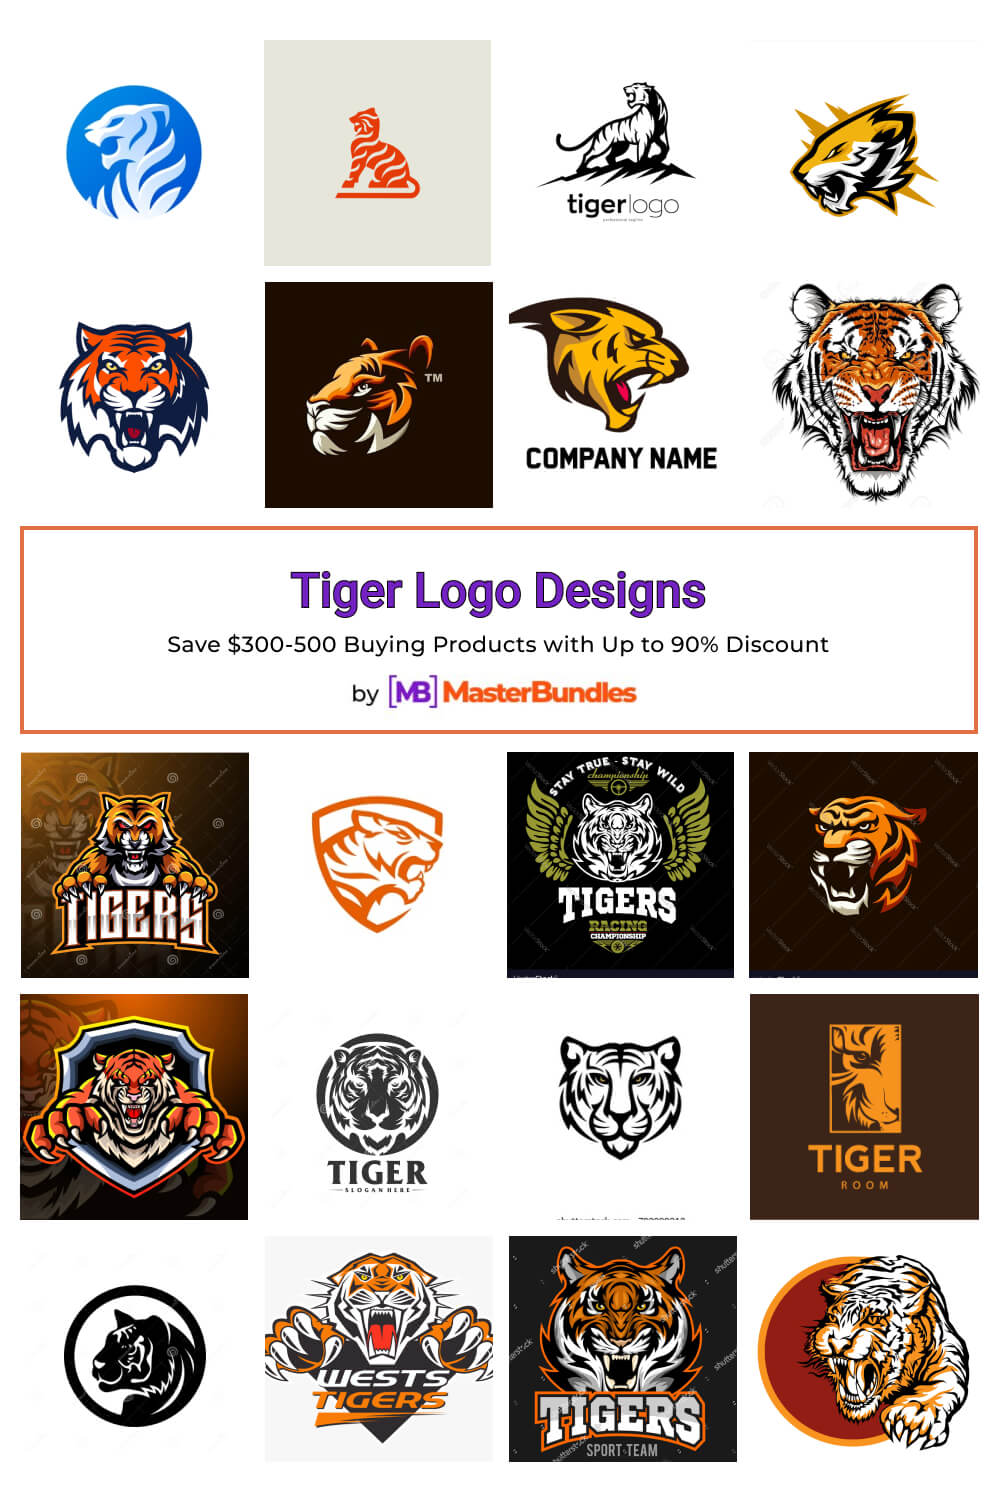 tiger logo designs pinterest image.